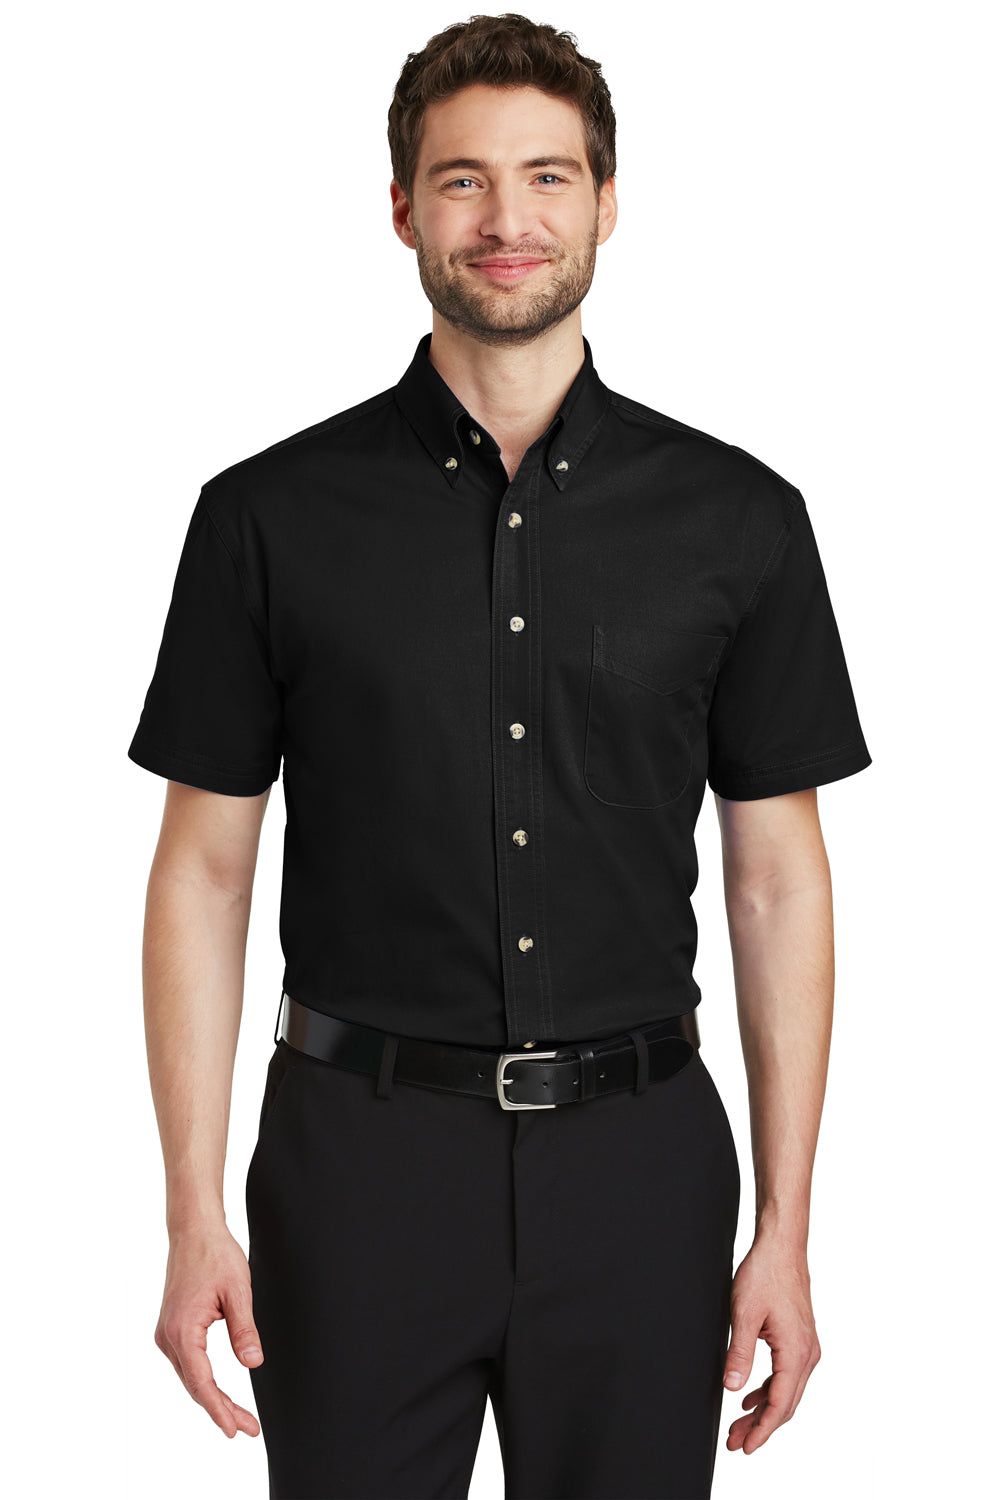 Port Authority S500T Mens Short Sleeve Button Down Shirt w/ Pocket Black Front